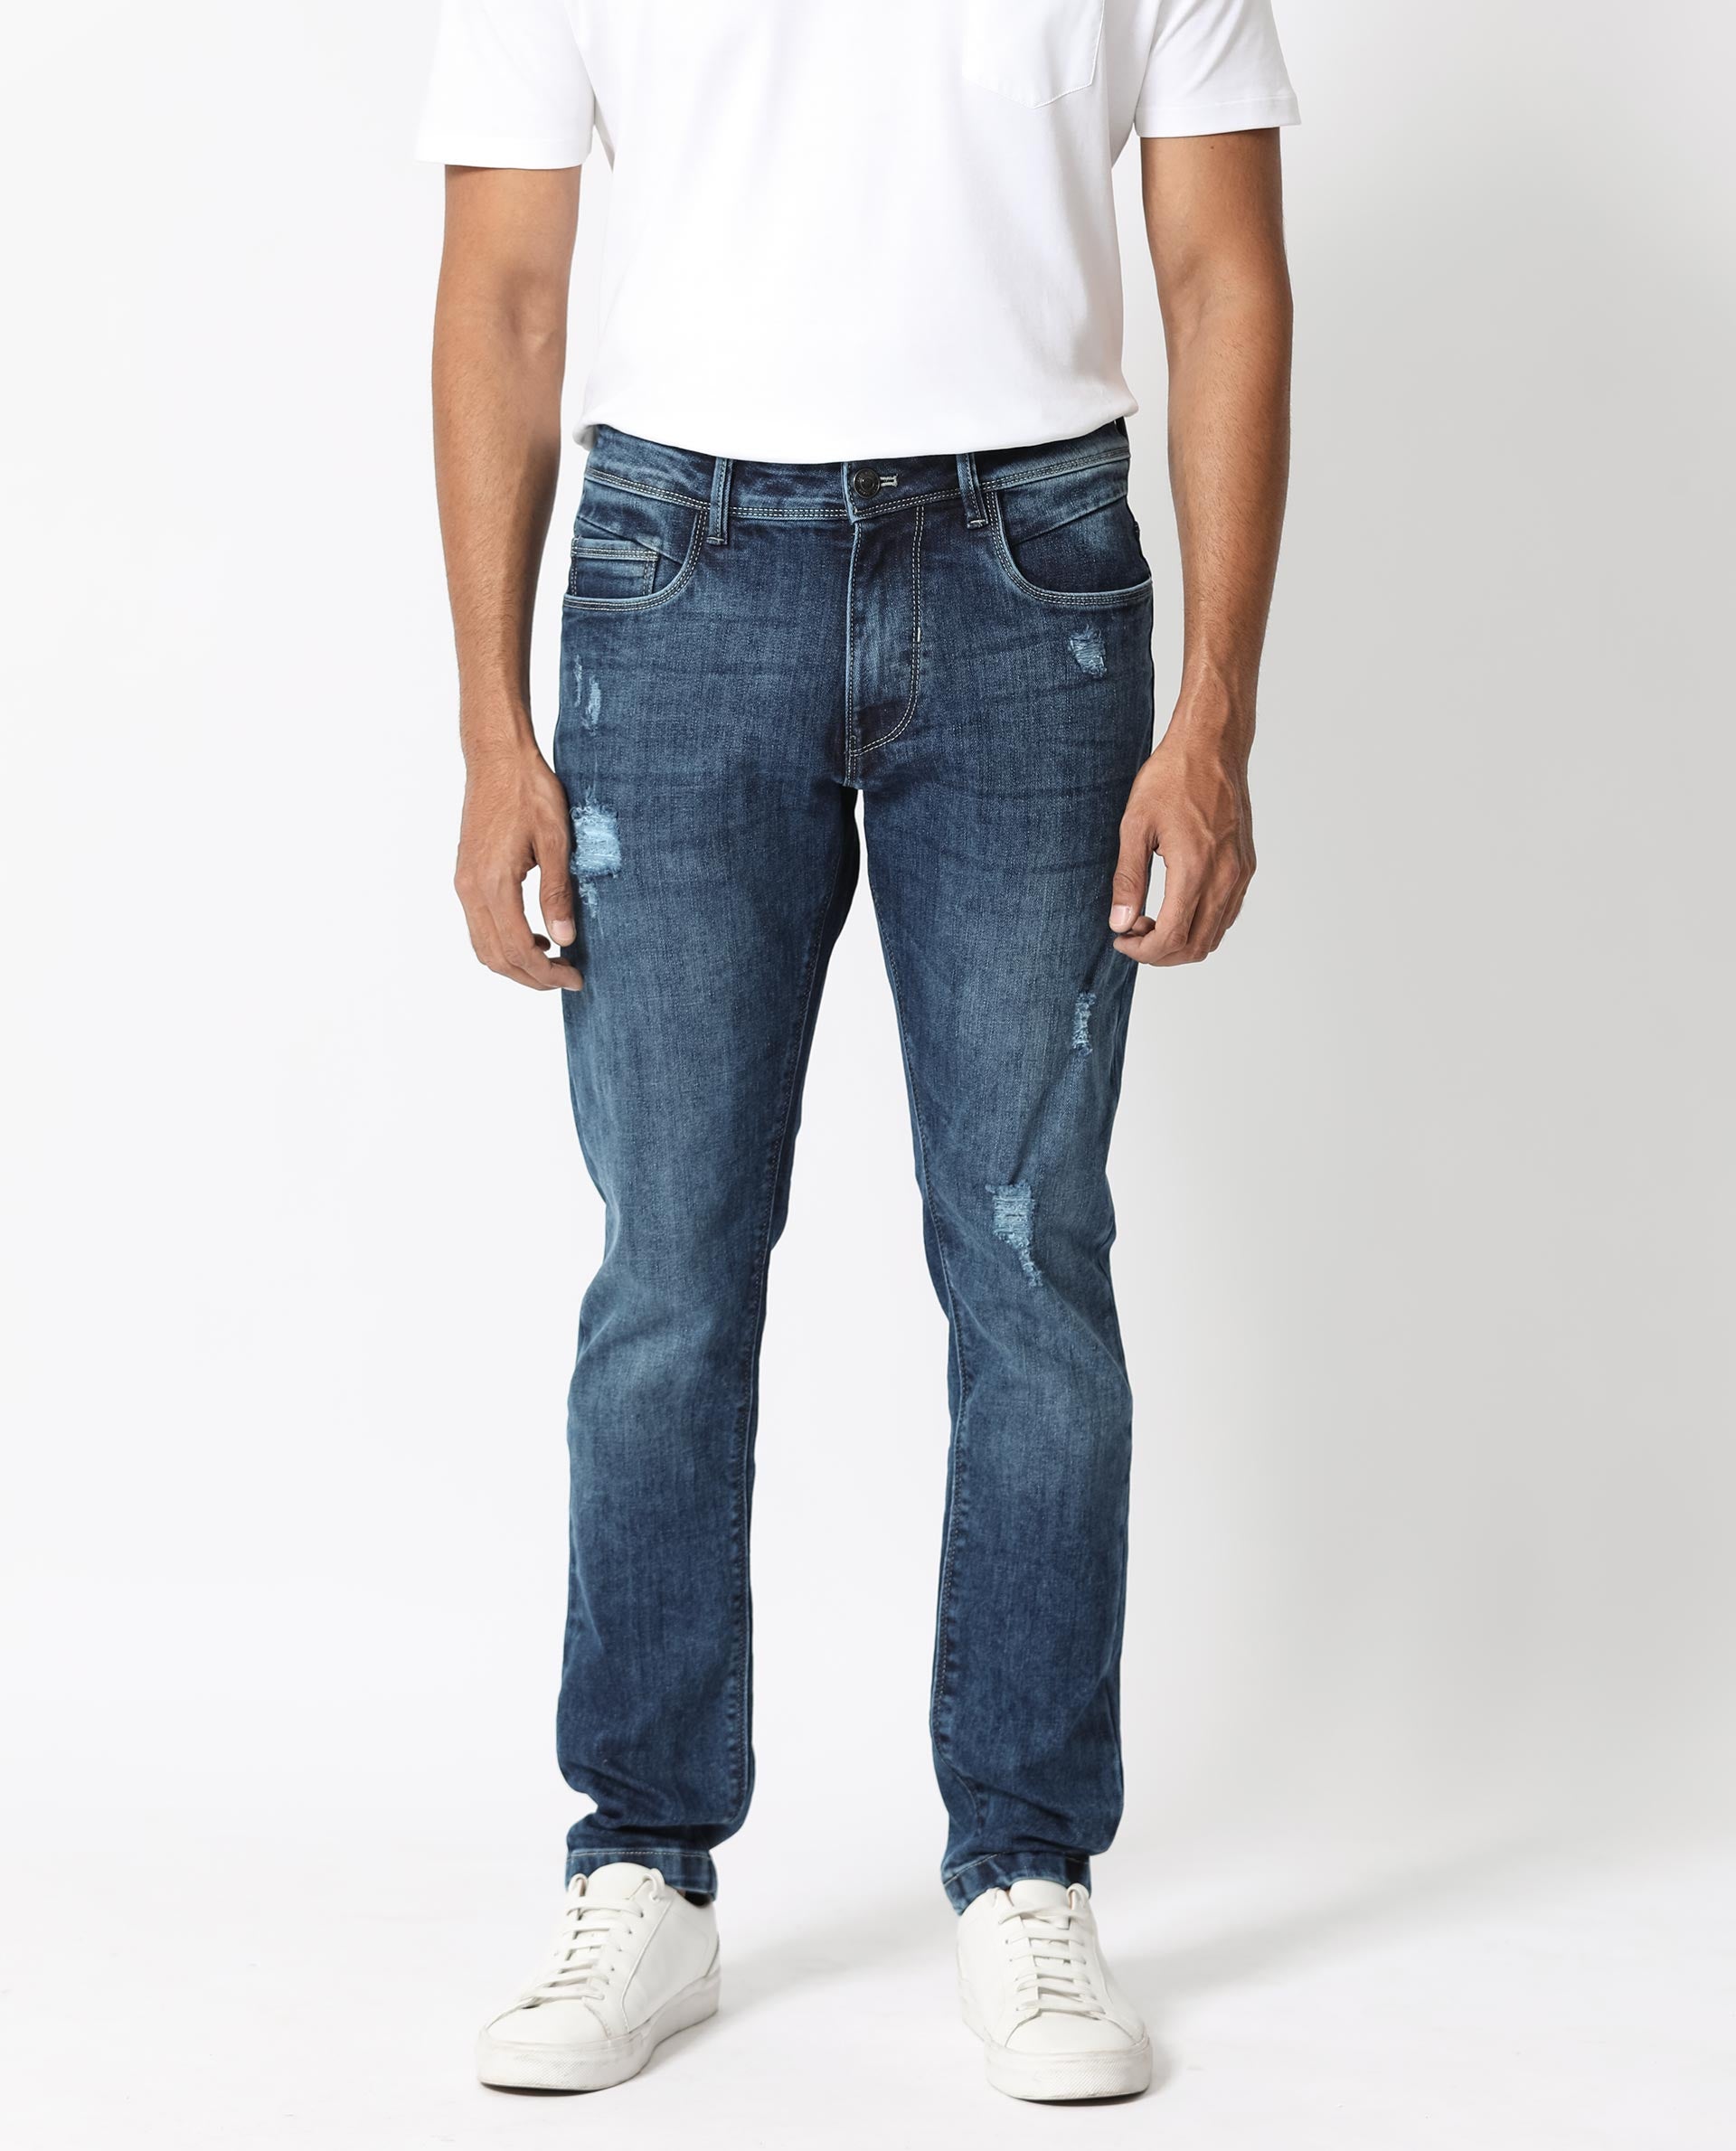 Buy VOI Jeans Men's Blood Red 100% Cotton Slim Fit Solid Half